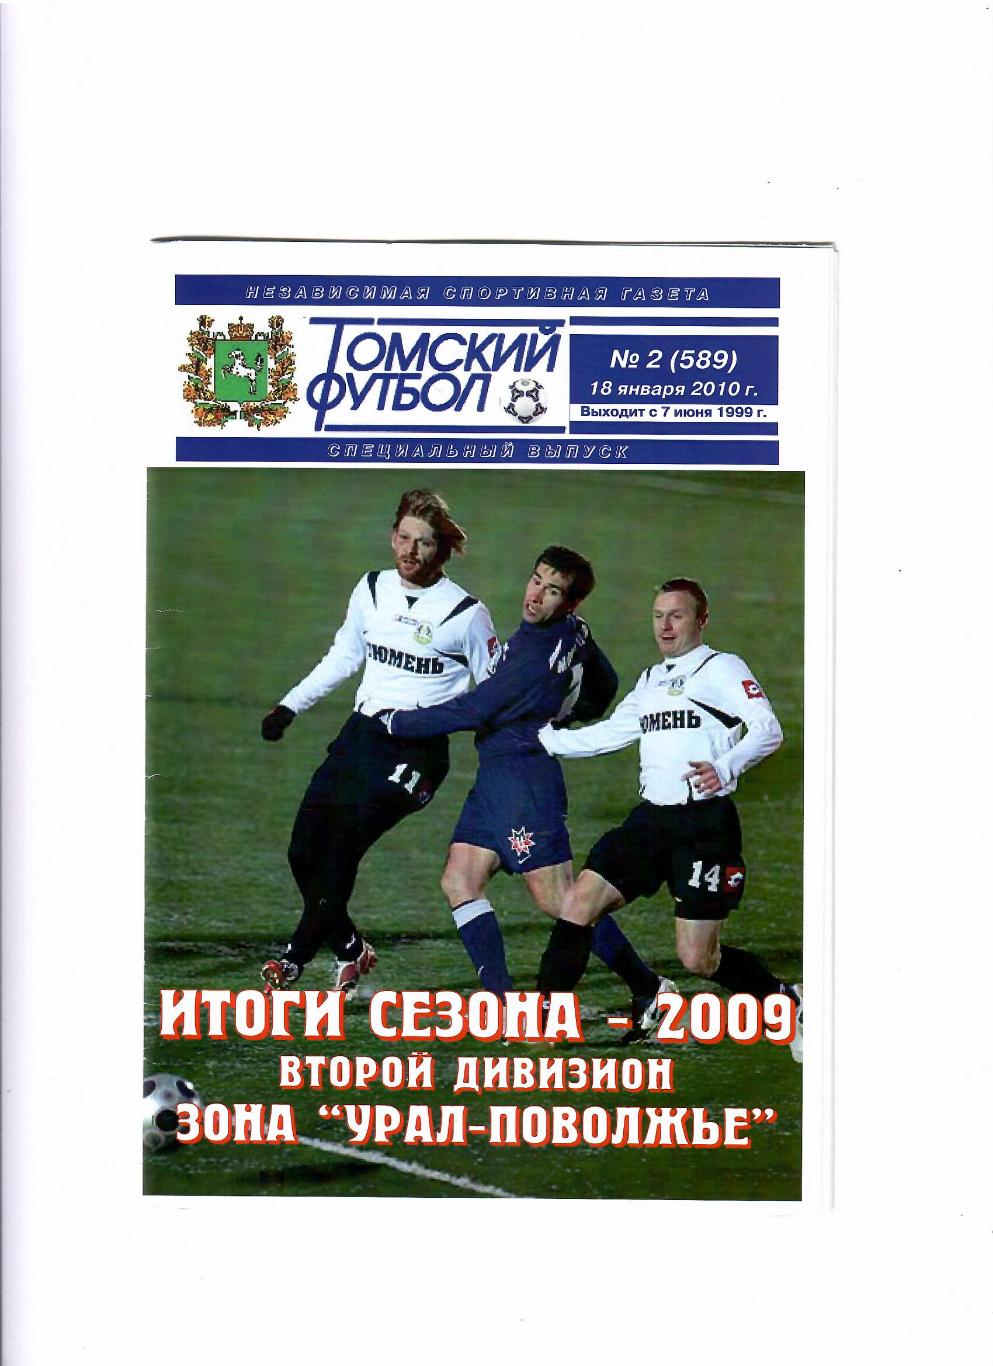 Томский футбол 2010 № 2 зона Урал-Поволжье